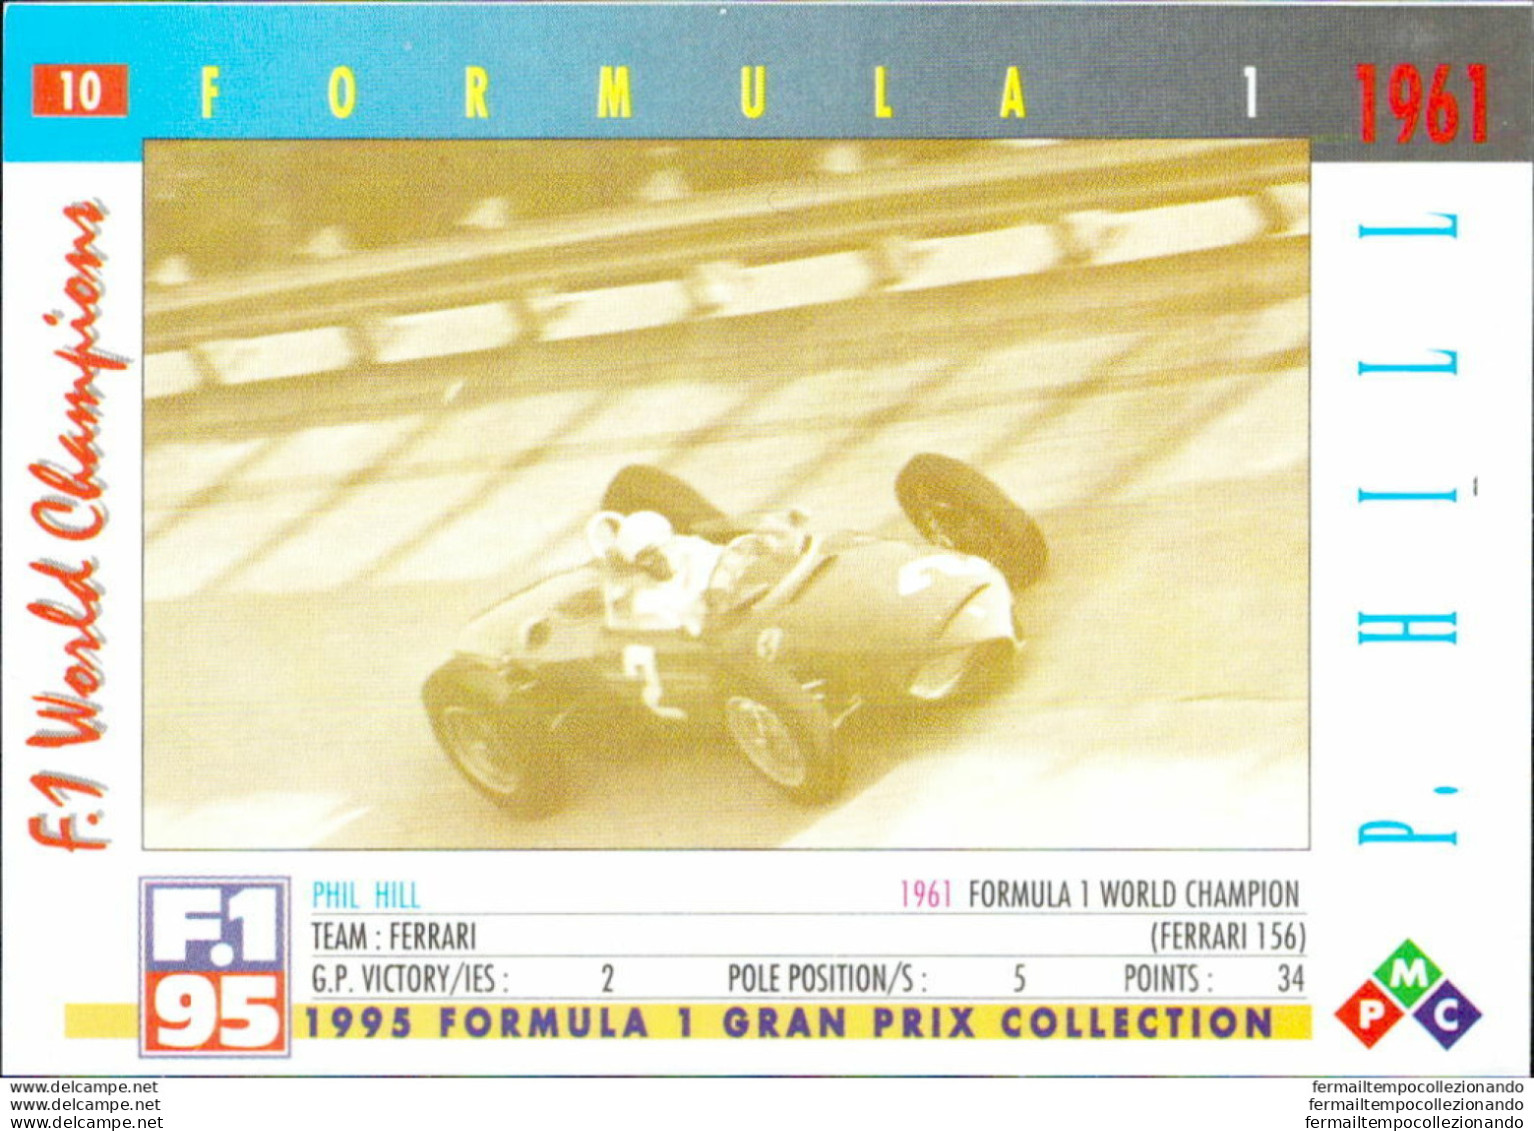 Bh10 1995 Formula 1 Gran Prix Collection Card P.hill N 10 - Cataloghi